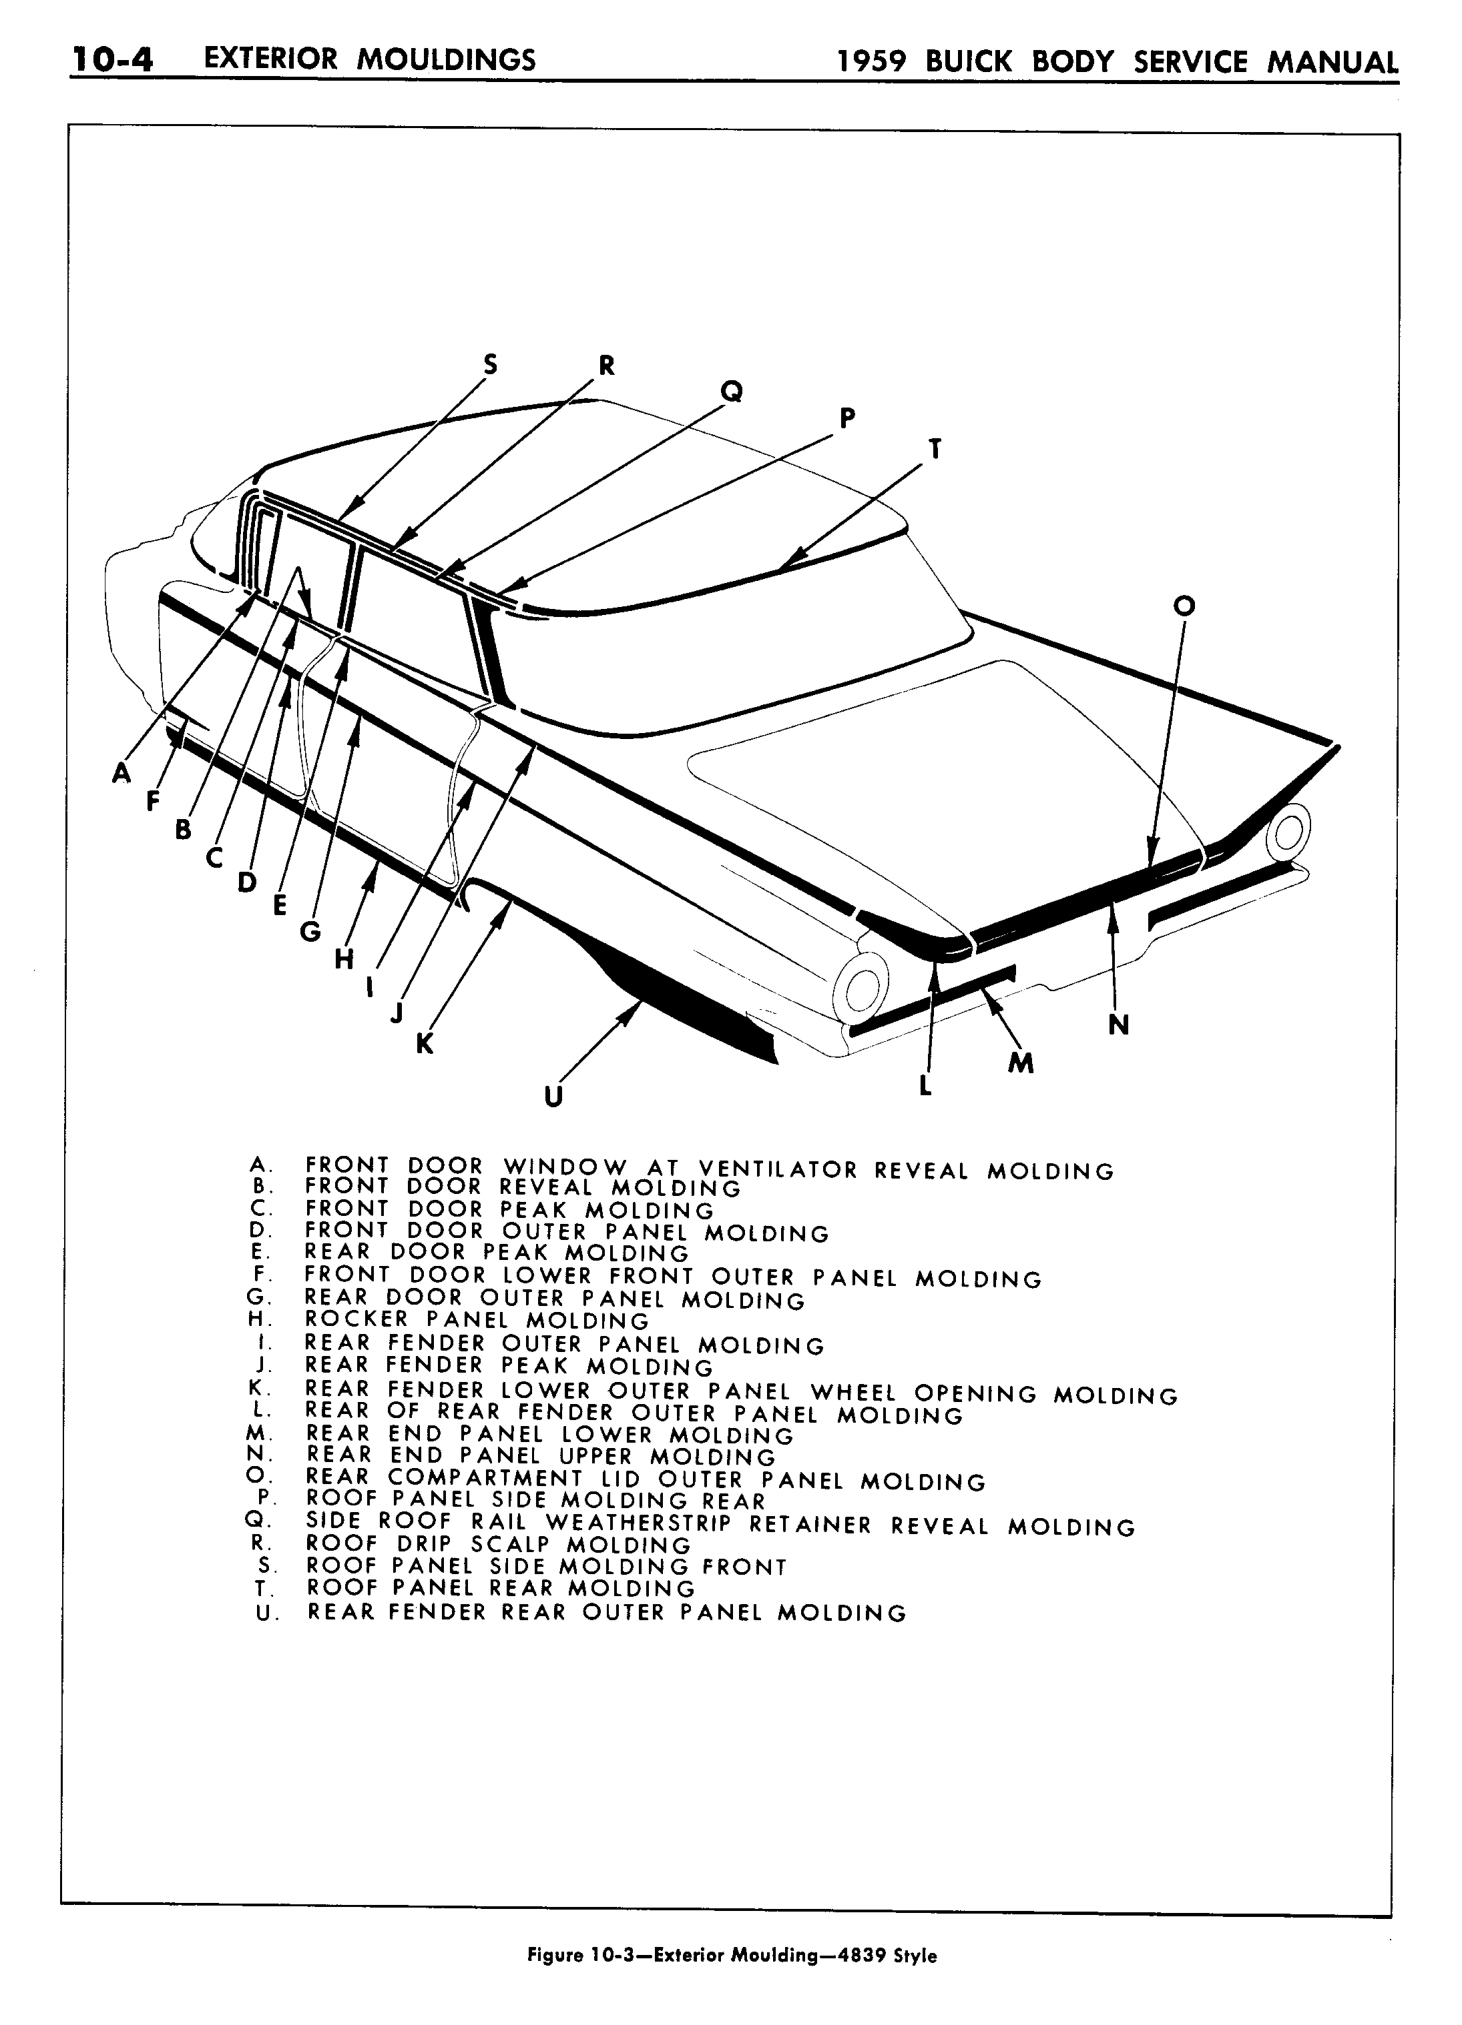 n_11 1959 Buick Body Service-Exterior Moldings_4.jpg